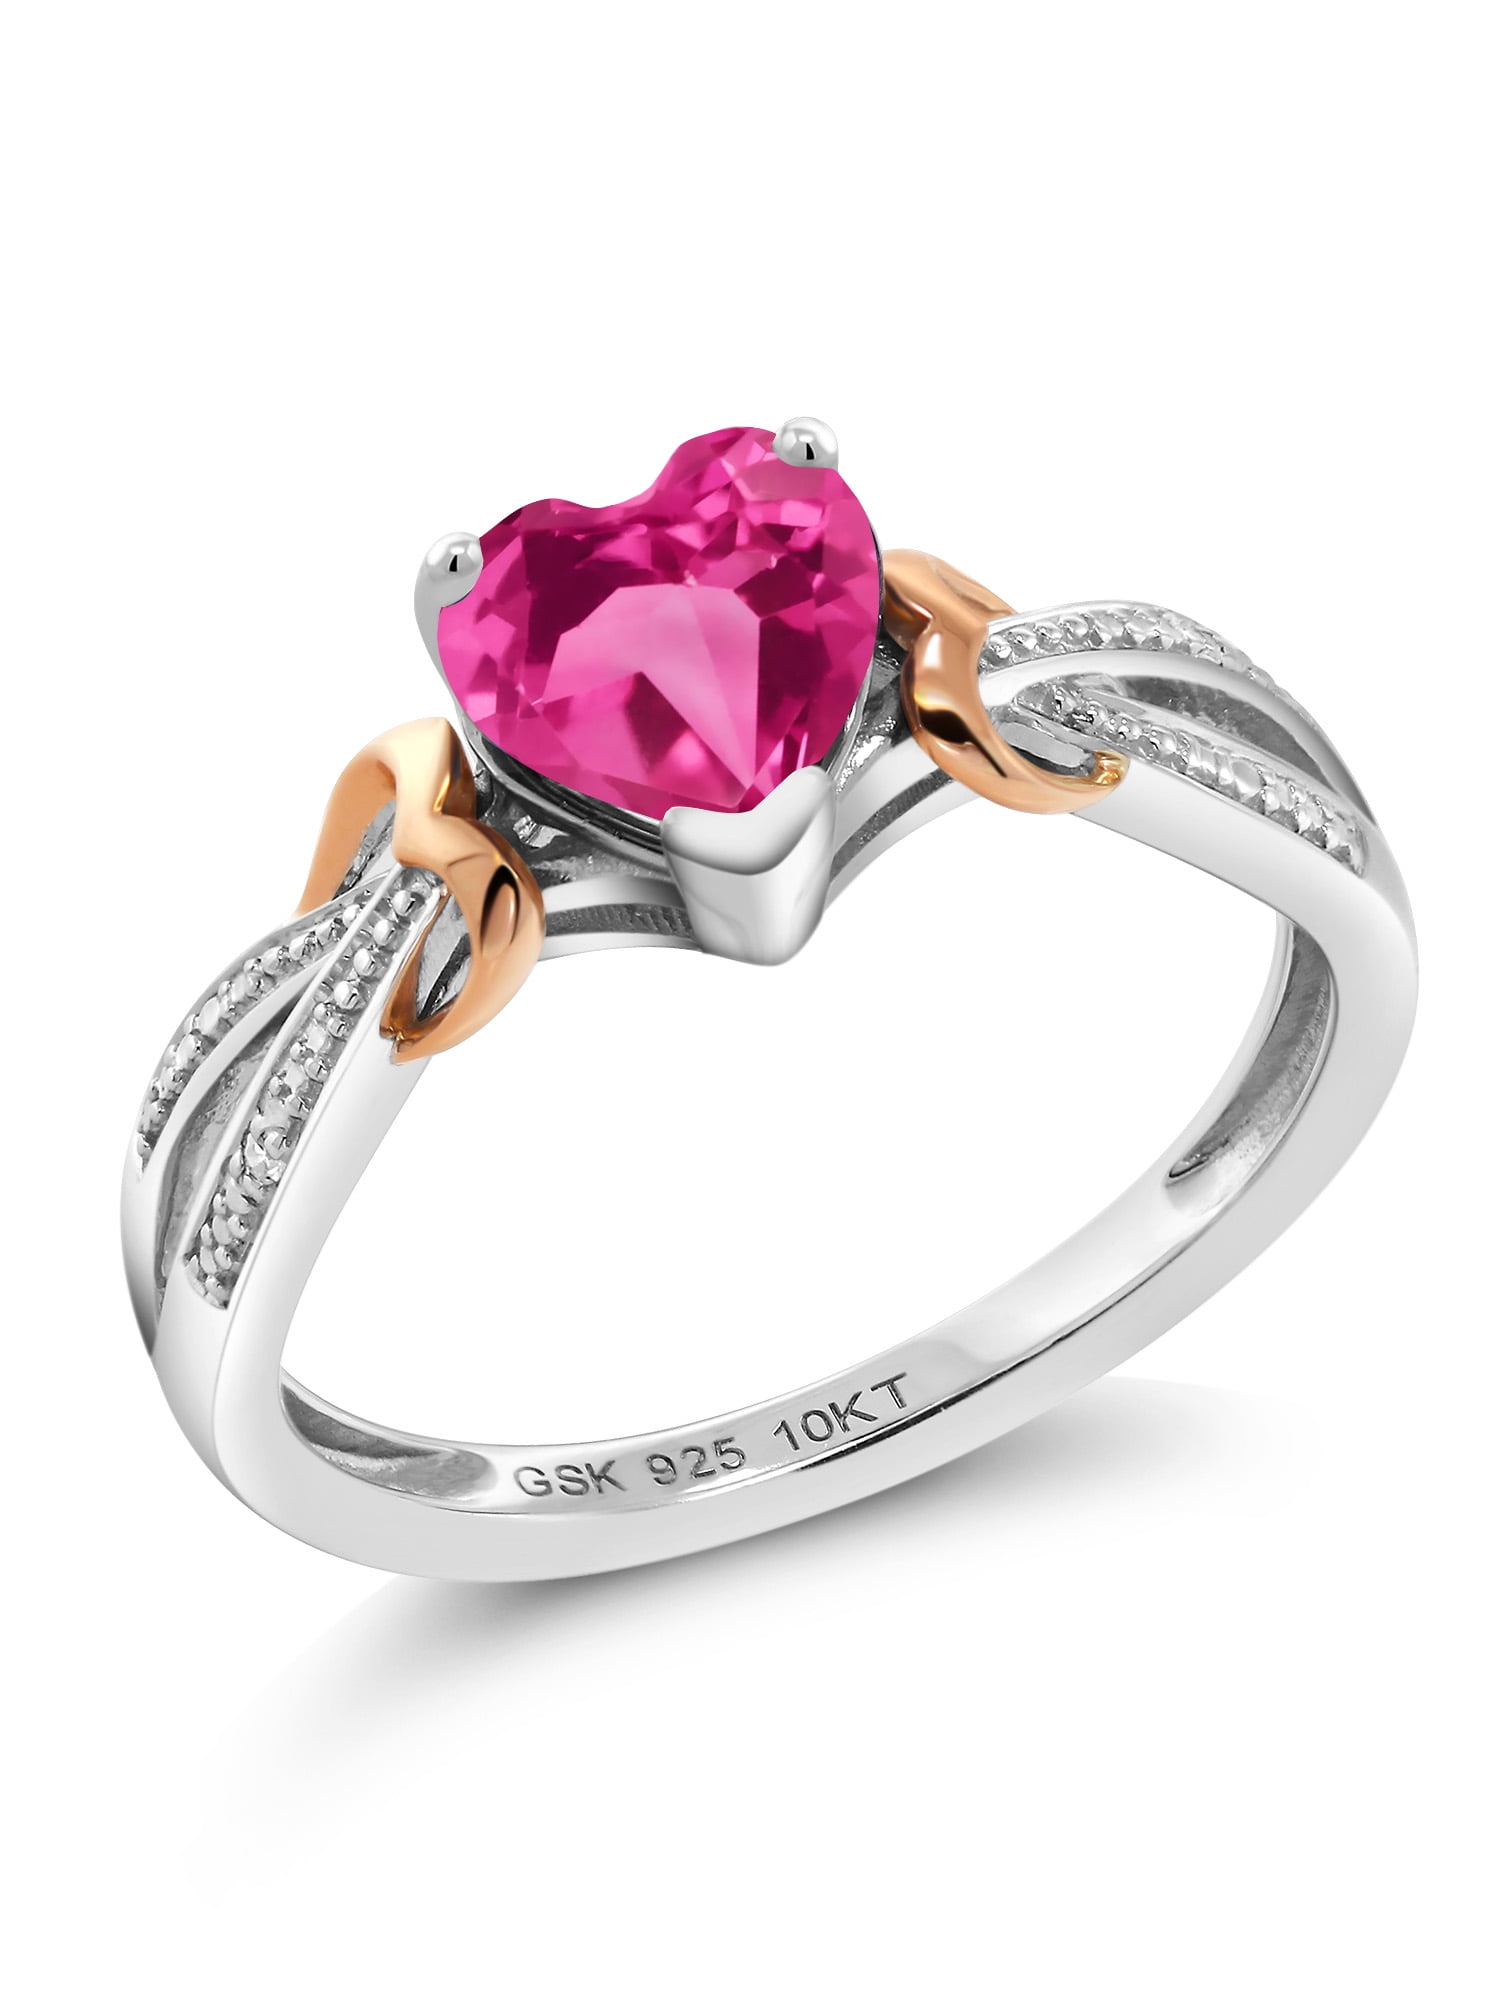 3 Ct Solitaire Pink Sapphire Ring Women Wedding Birthday Jewelry Size 5 6 7 8 9